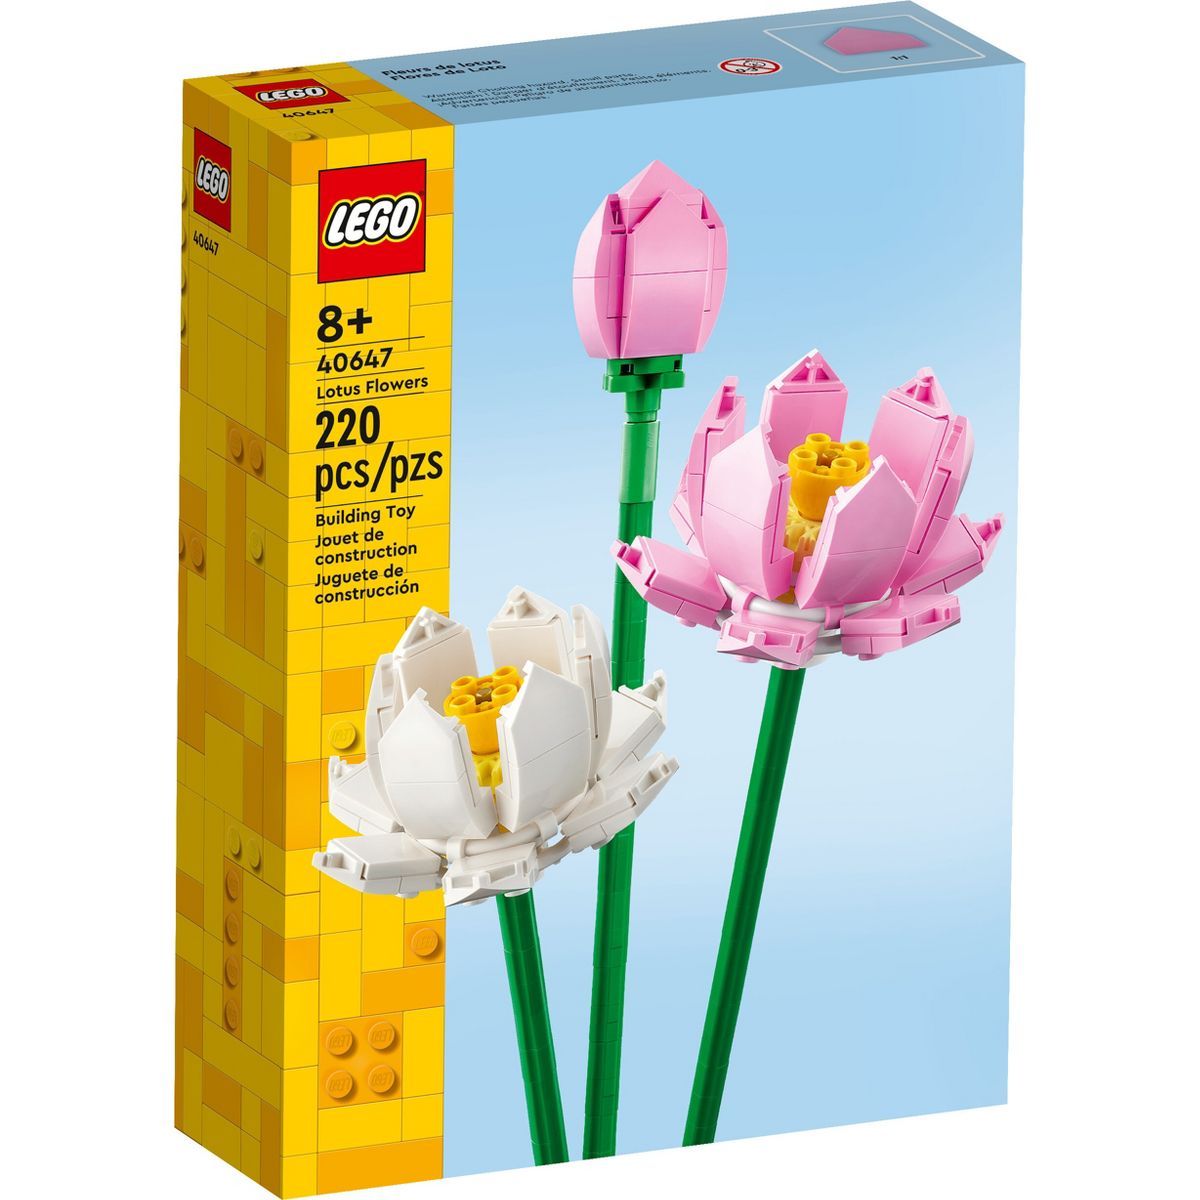 LEGO Lotus Flowers Building Toy Set 40647 | Target